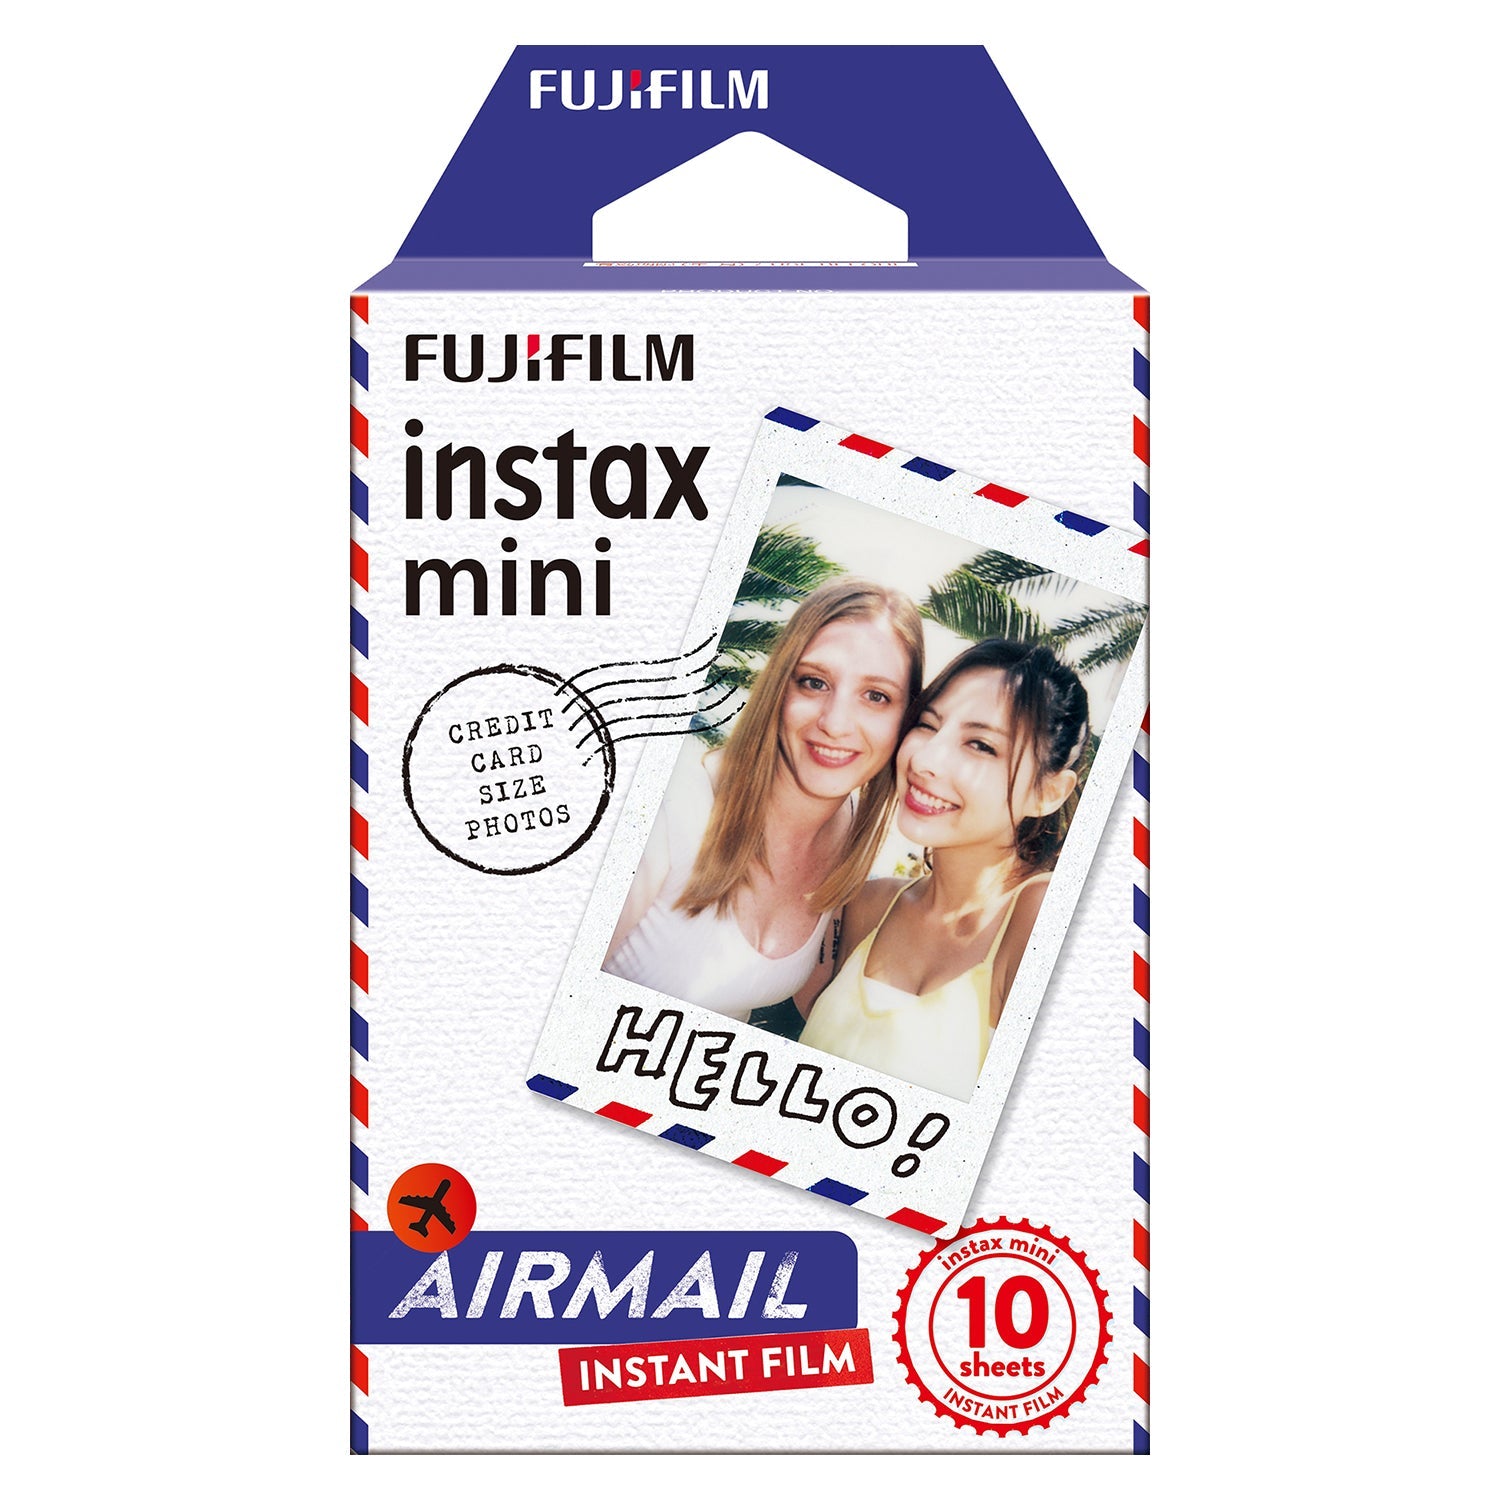 Fujifilm Instax Mini 10X1 airmail Instant Film with 64-Sheets Album For Mini Film 3 inch (lce white)